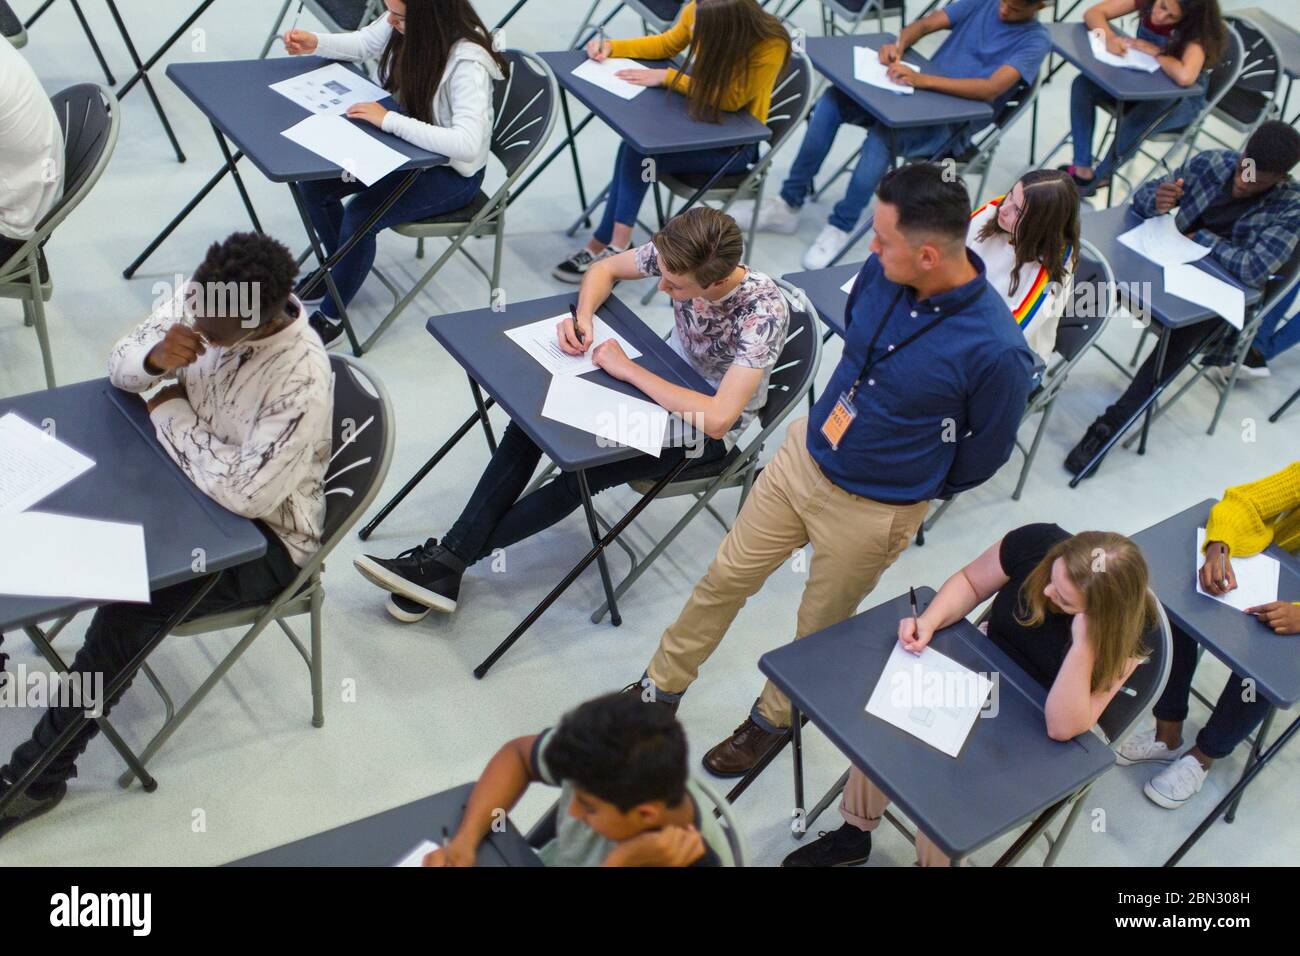 Teacher supervising high school students taking exam at desks Stock Photo